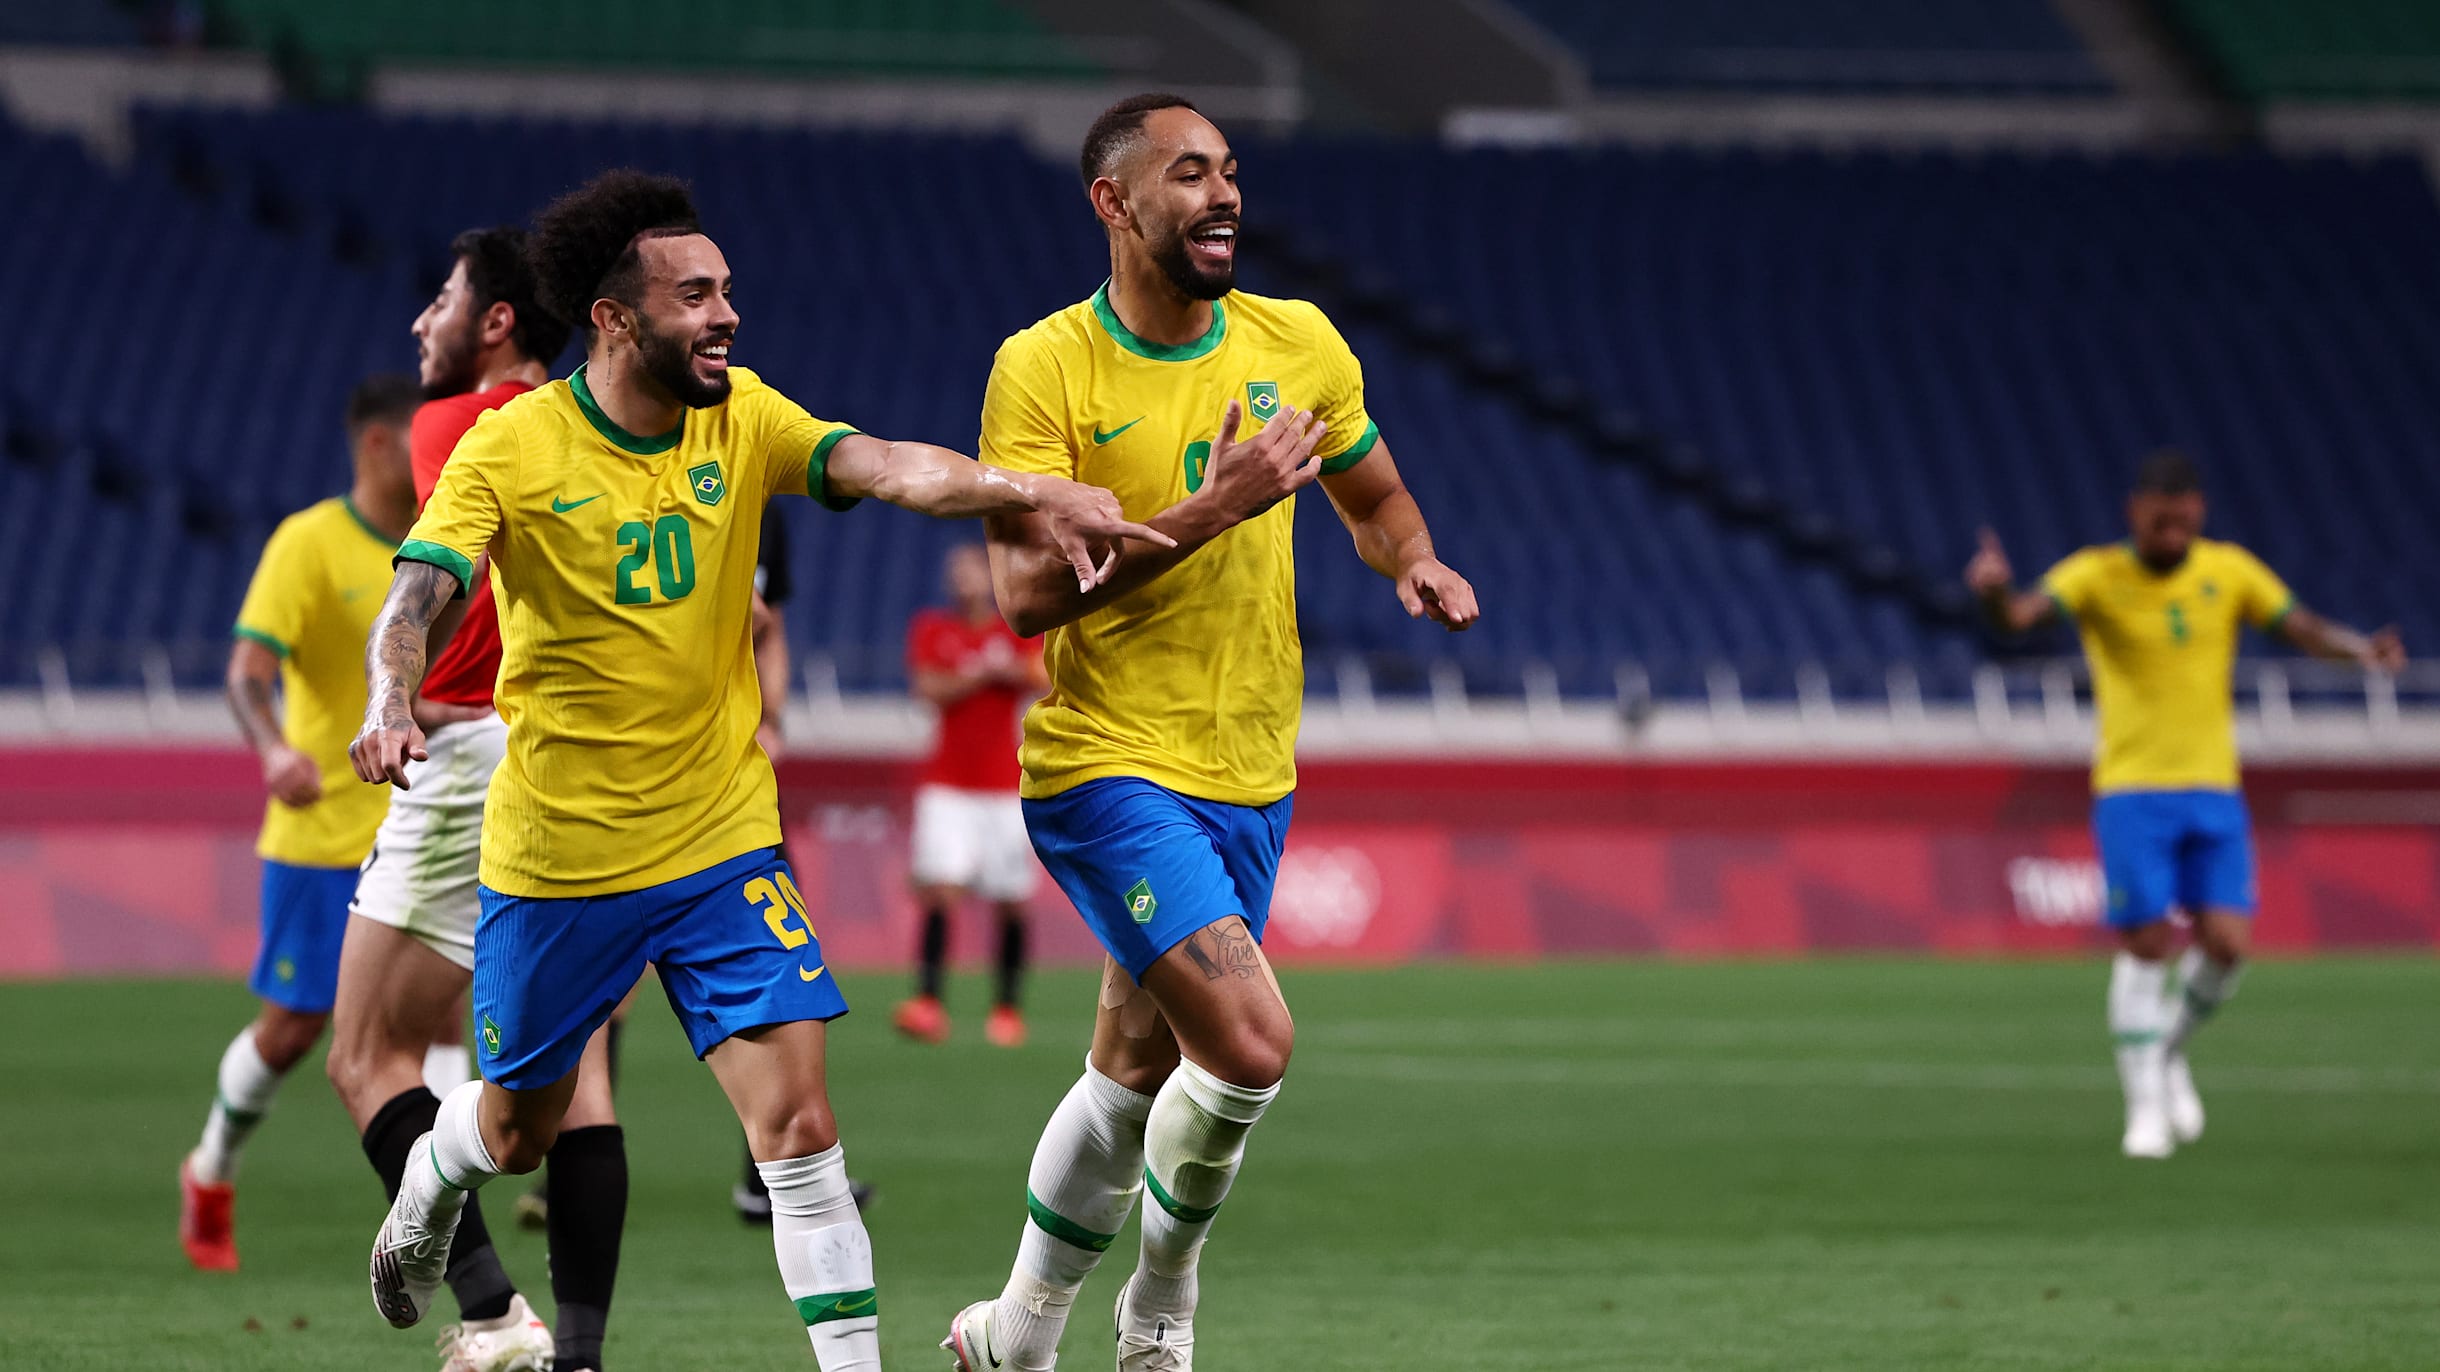 Brasil avança no futebol masculino dos Jogos Olímpicos; veja